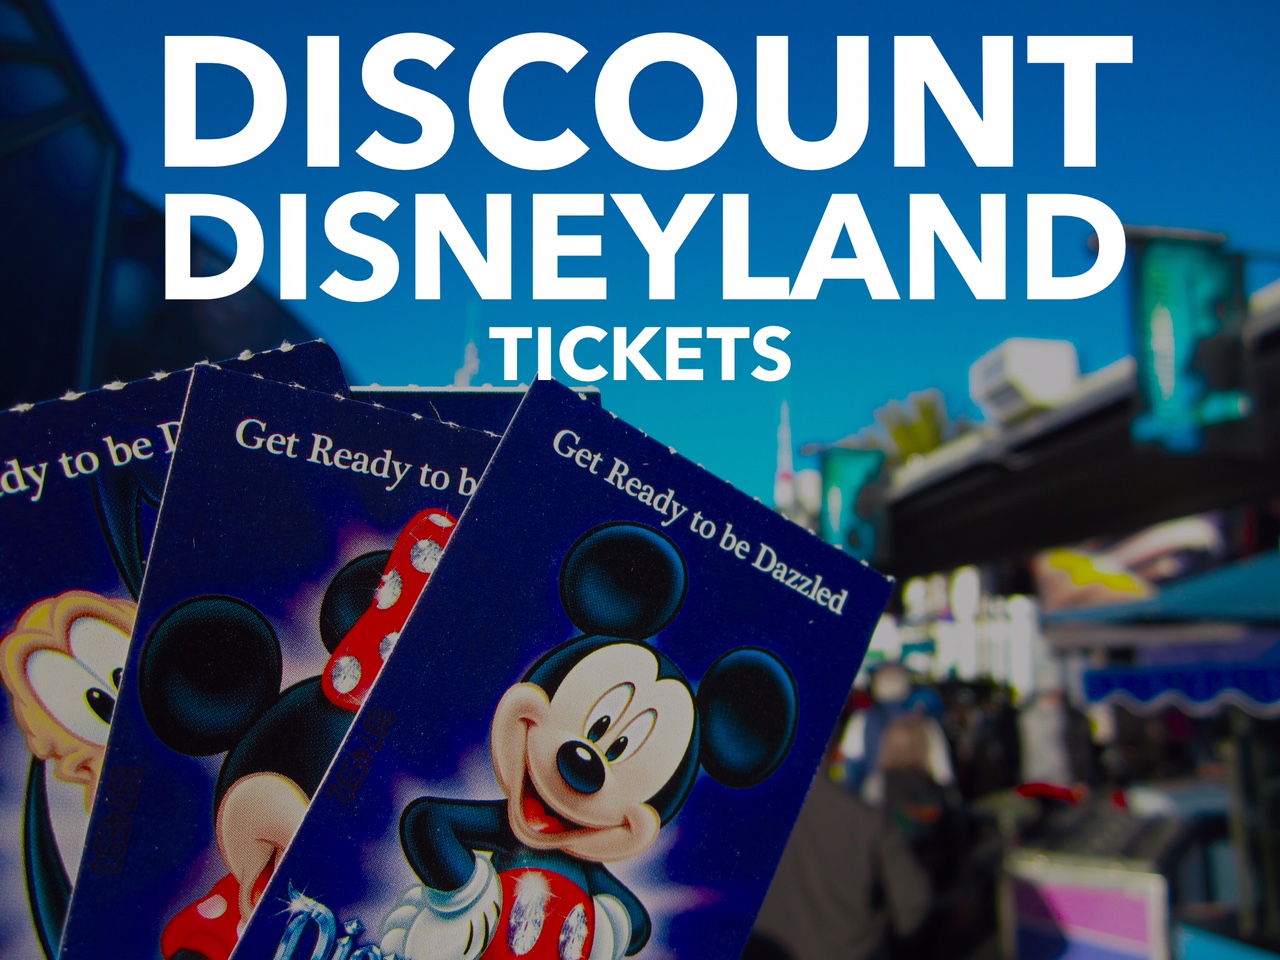 Disneyland Summer Ticket Deal